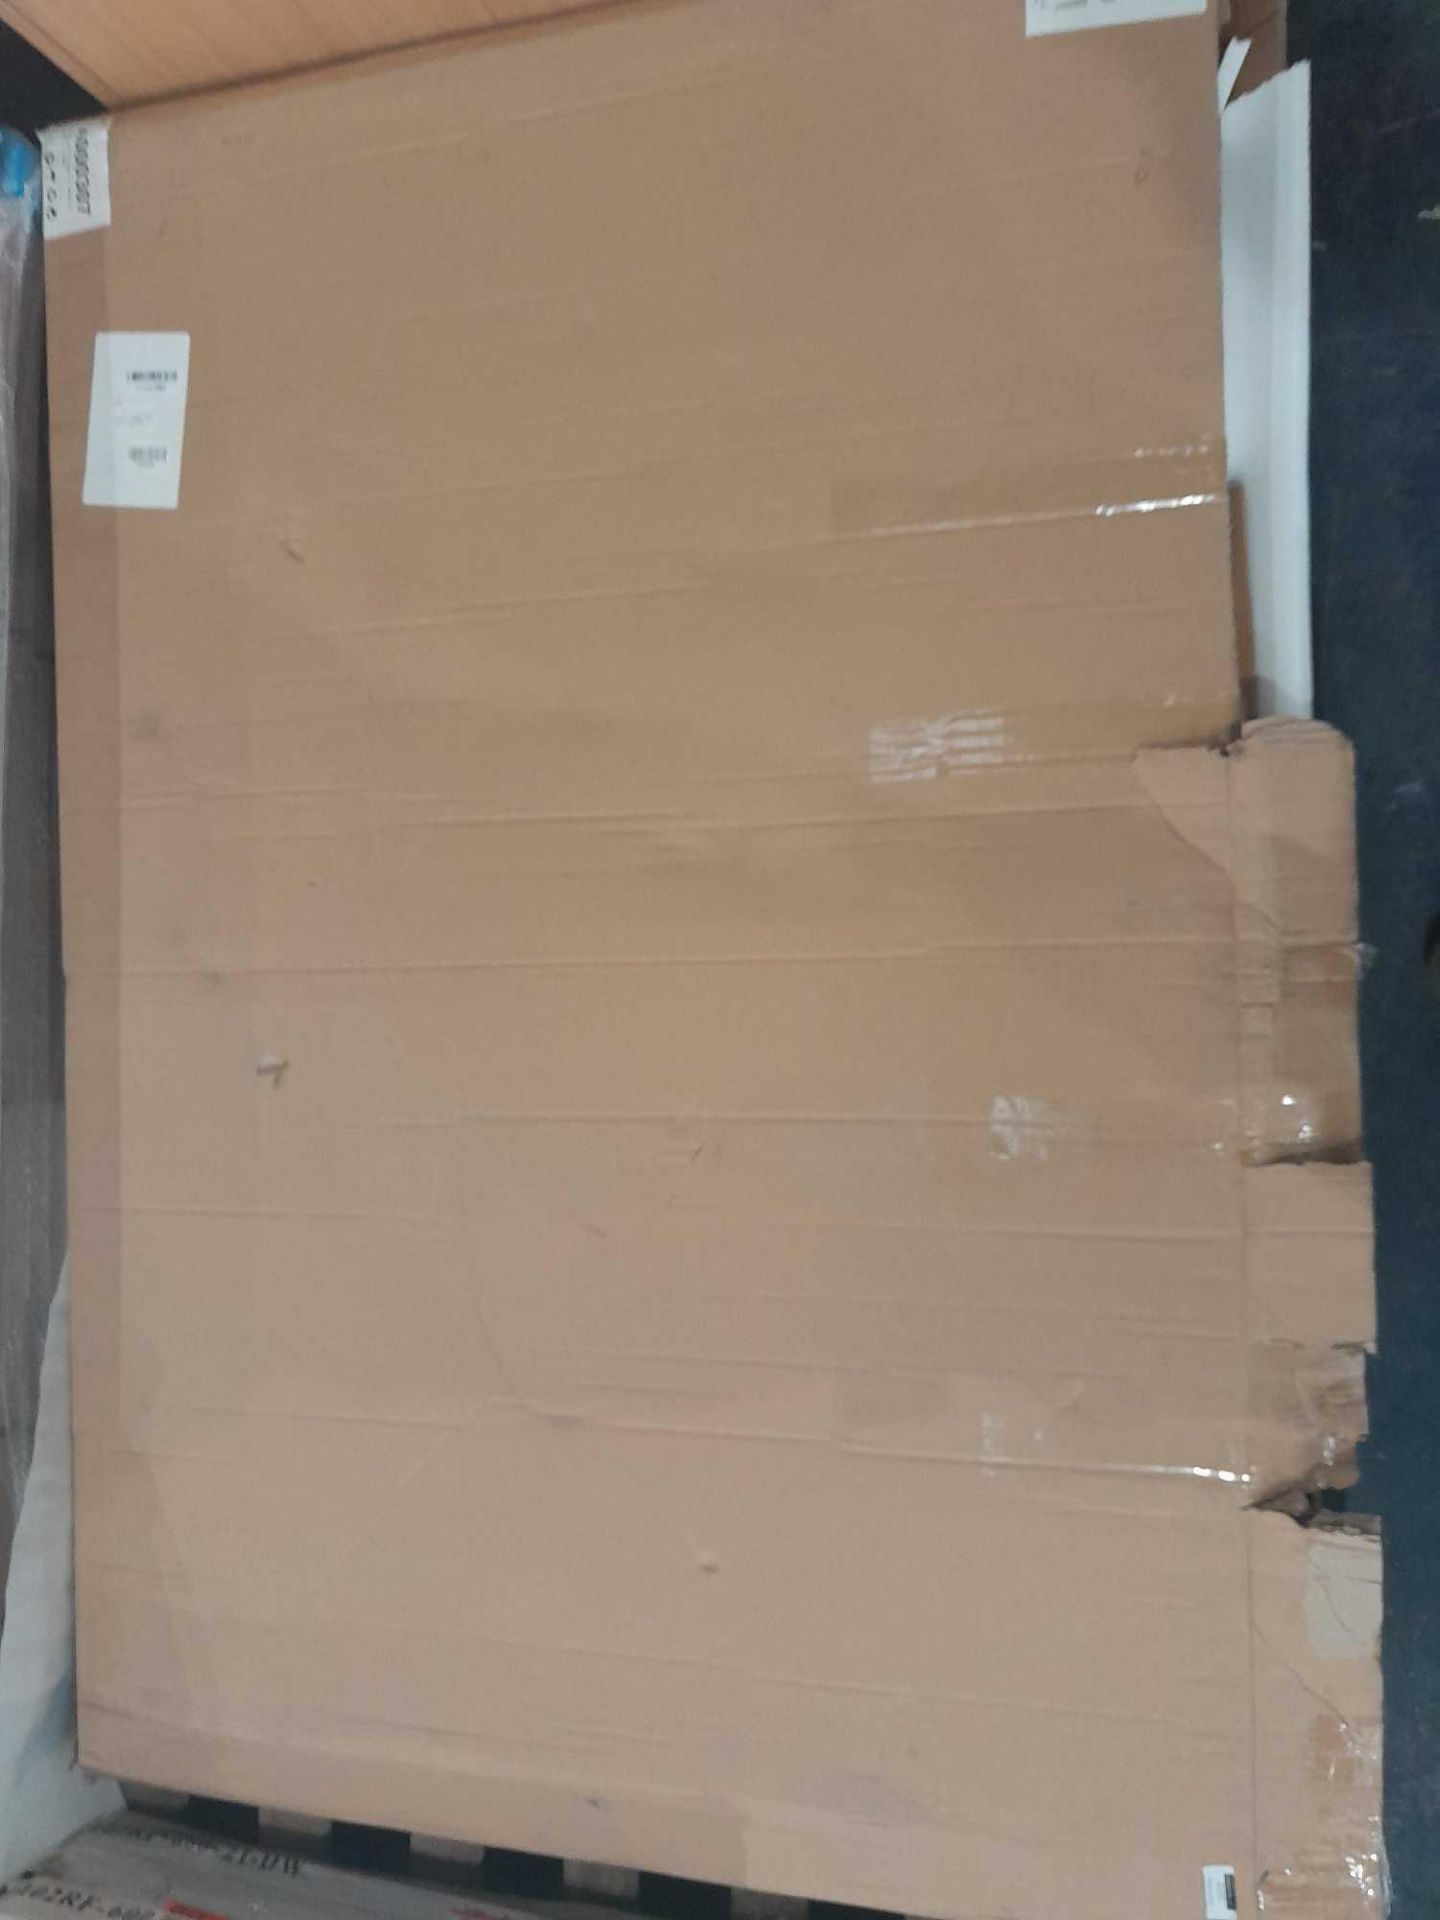 RRP £120 Boxed White Metal Bedstead Headboard - Image 3 of 4